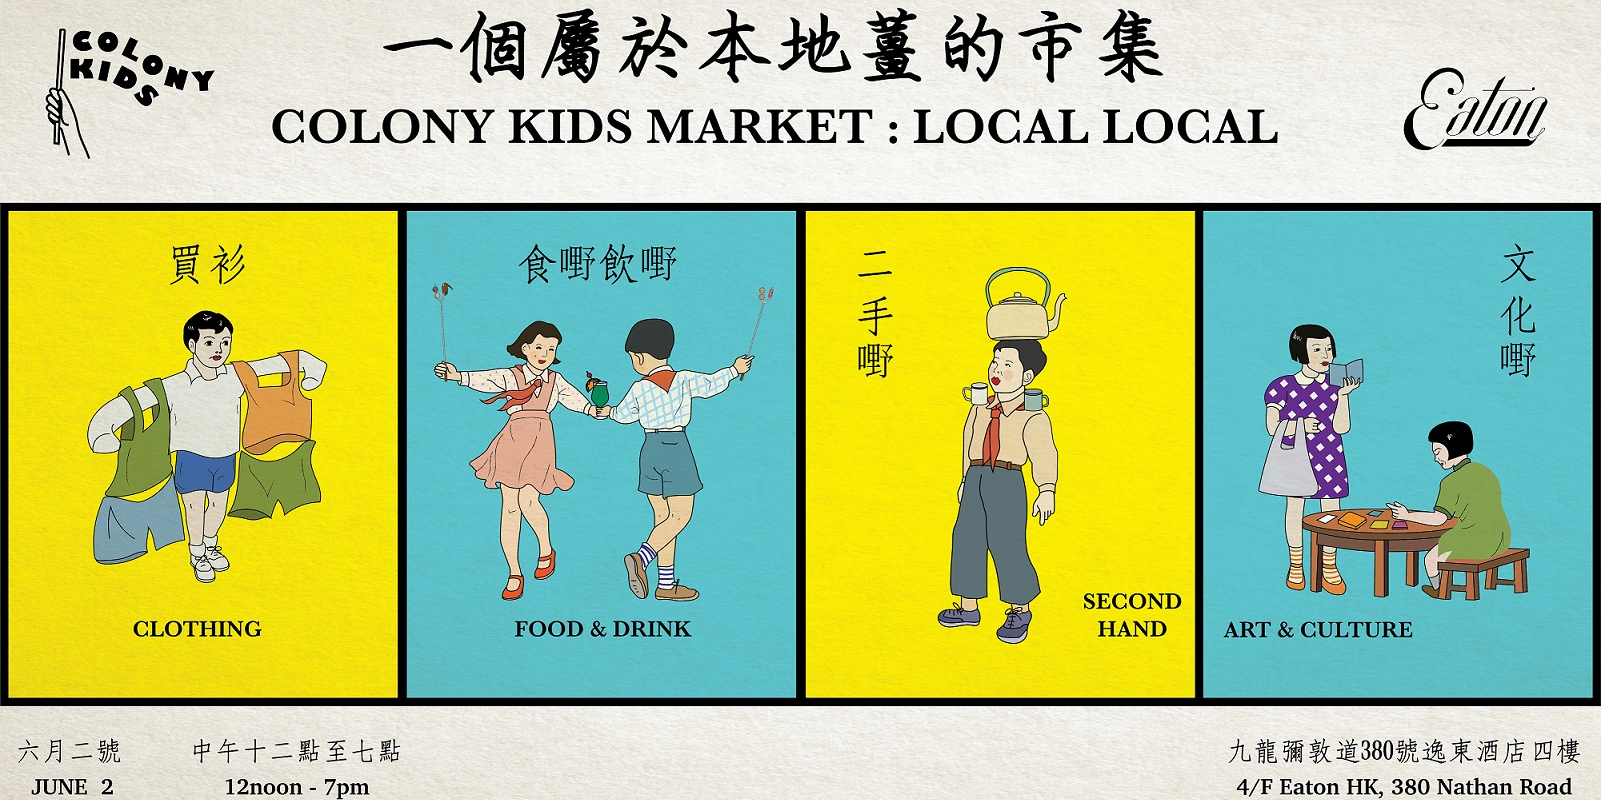 Colony Kids Market: Local Local